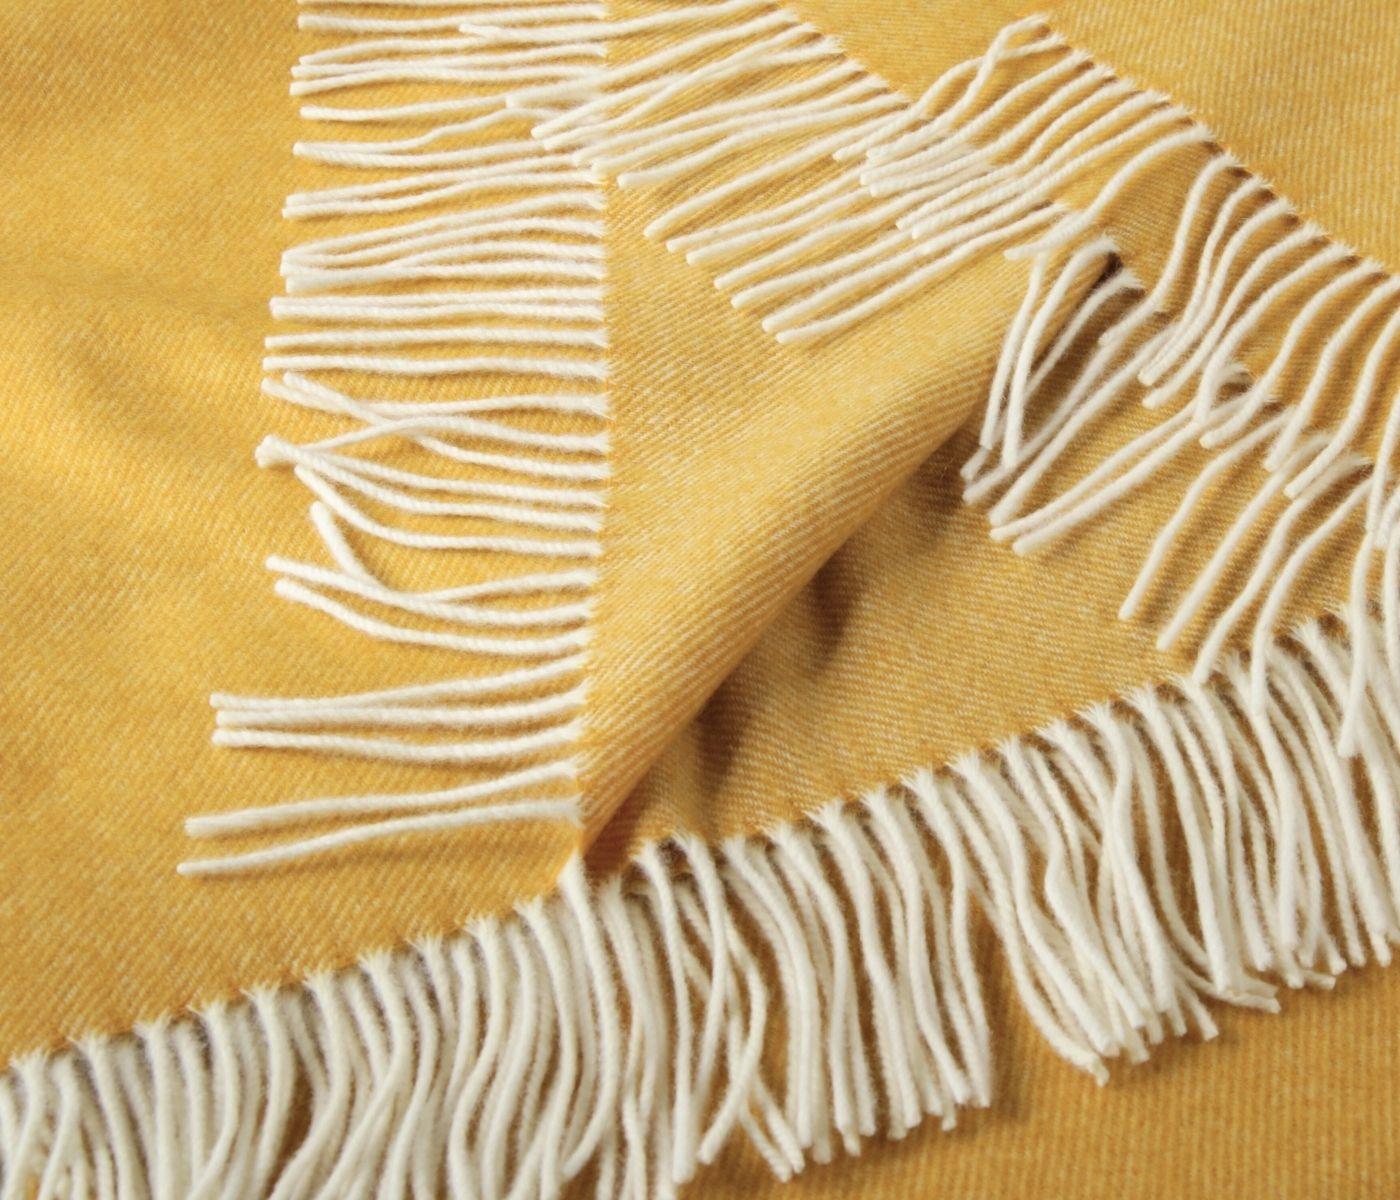 Eagle Products Plaid aus 100% Schurwolle in gelb, 130 x 200 cm